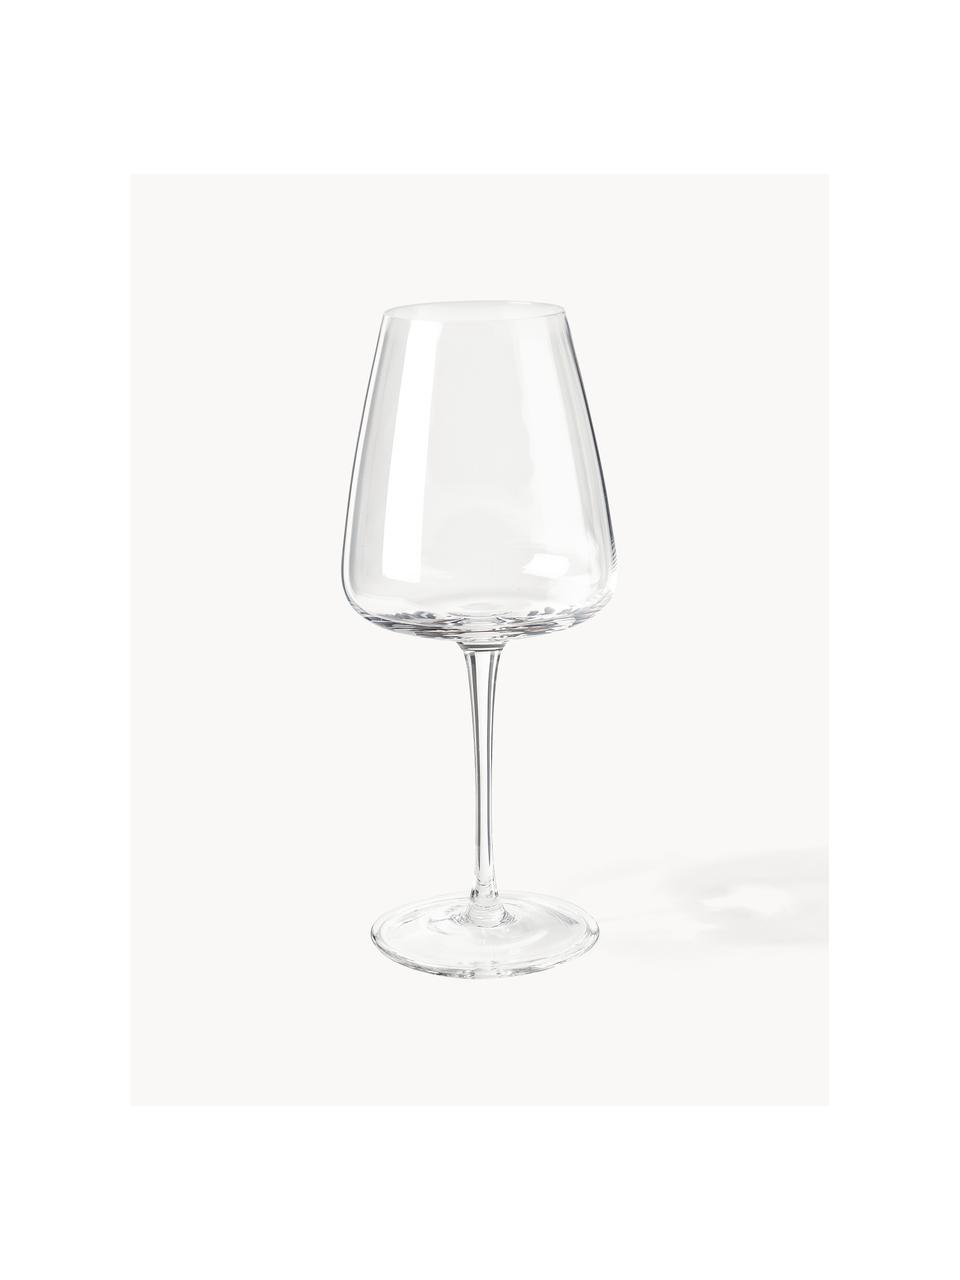 Bicchieri da vino bianco in vetro soffiato Ellery 4 pz, Vetro, Ocra, Ø 9 x Alt. 21 cm, 400 ml